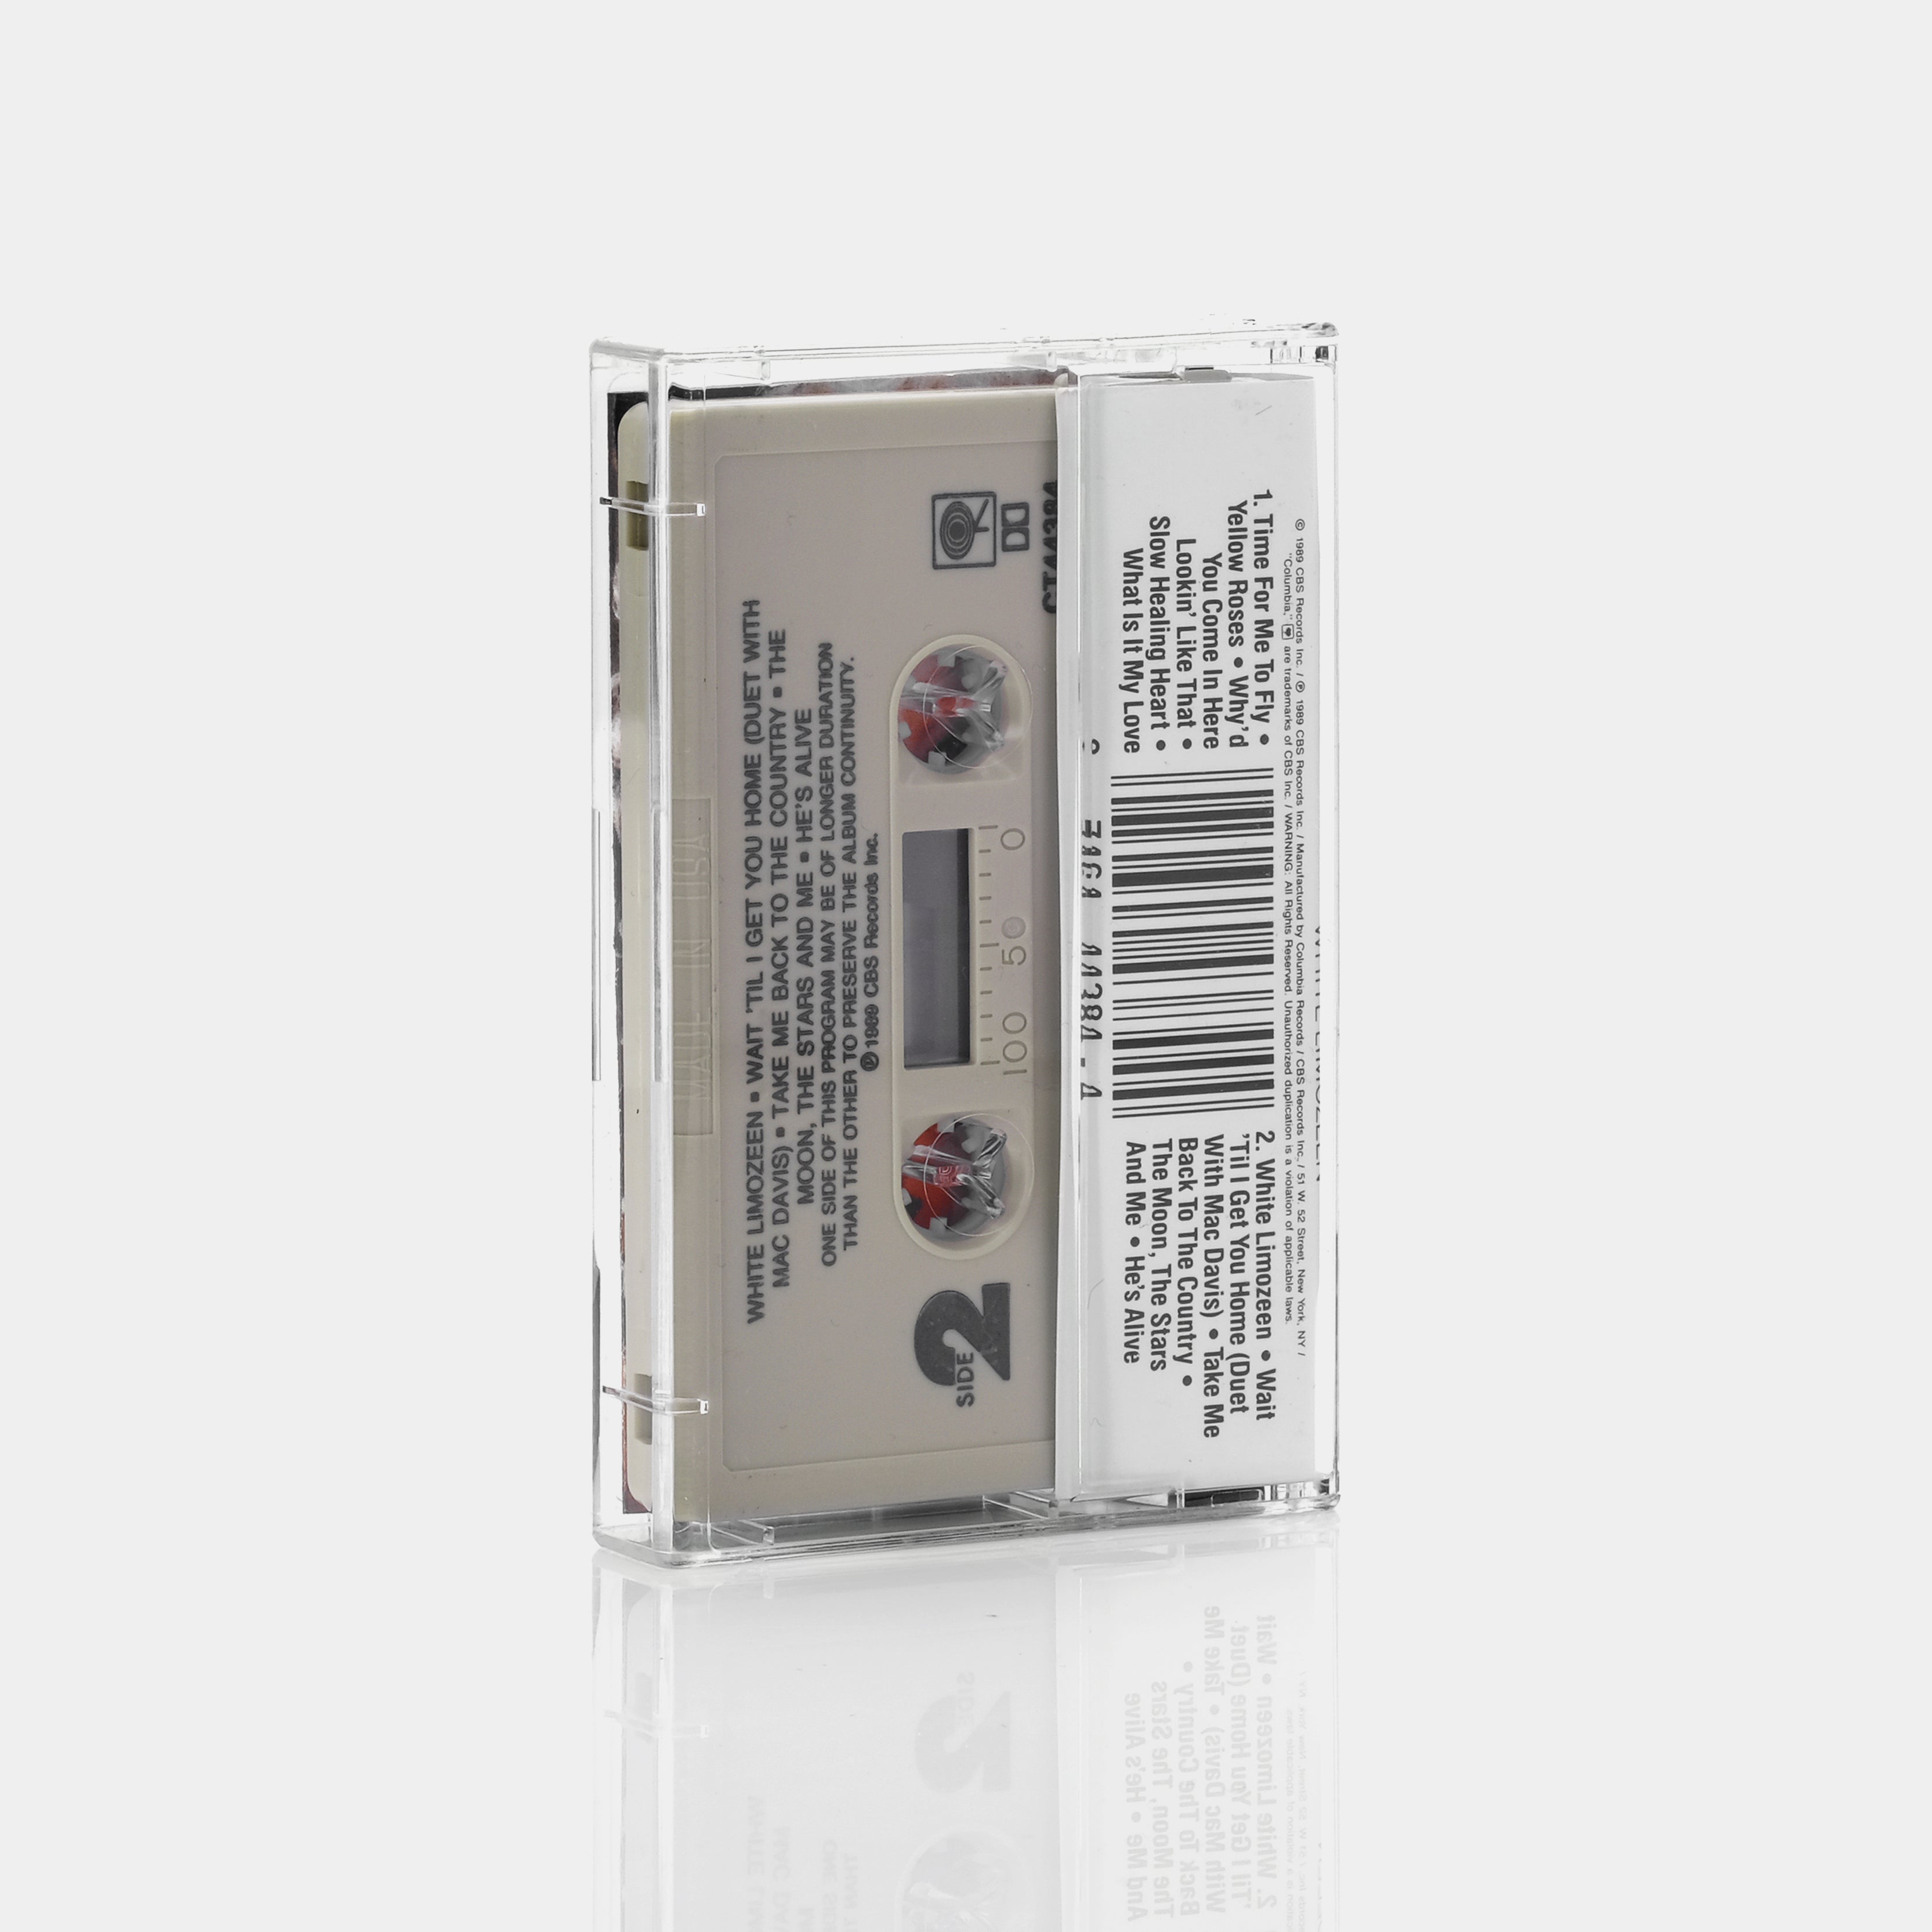 Dolly Parton - White Limozeen Cassette Tape